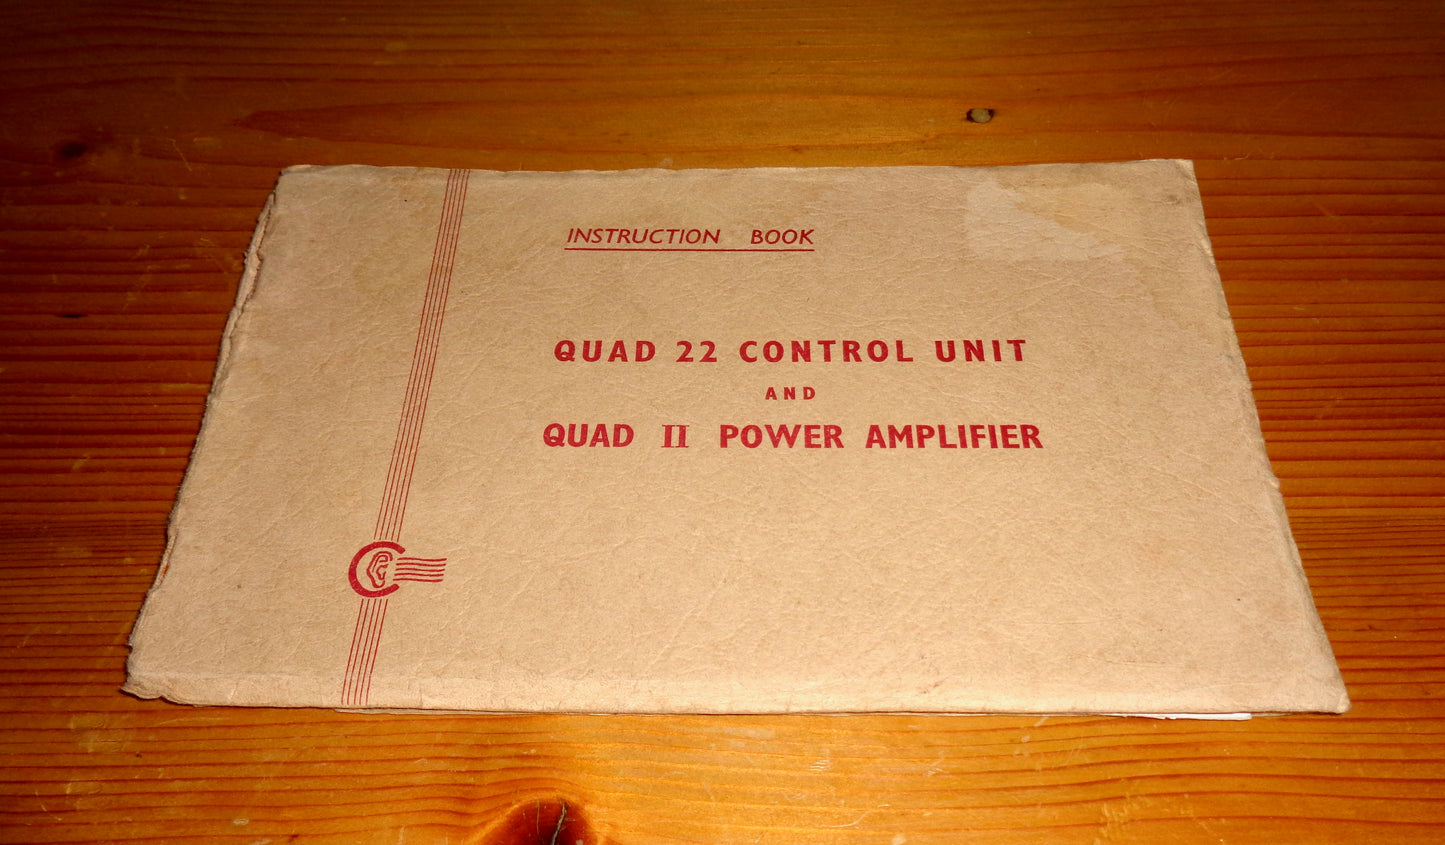 Original Quad 22 Control Unit And Quad II Power Amplifier Instruction Book Issue 3 12.59